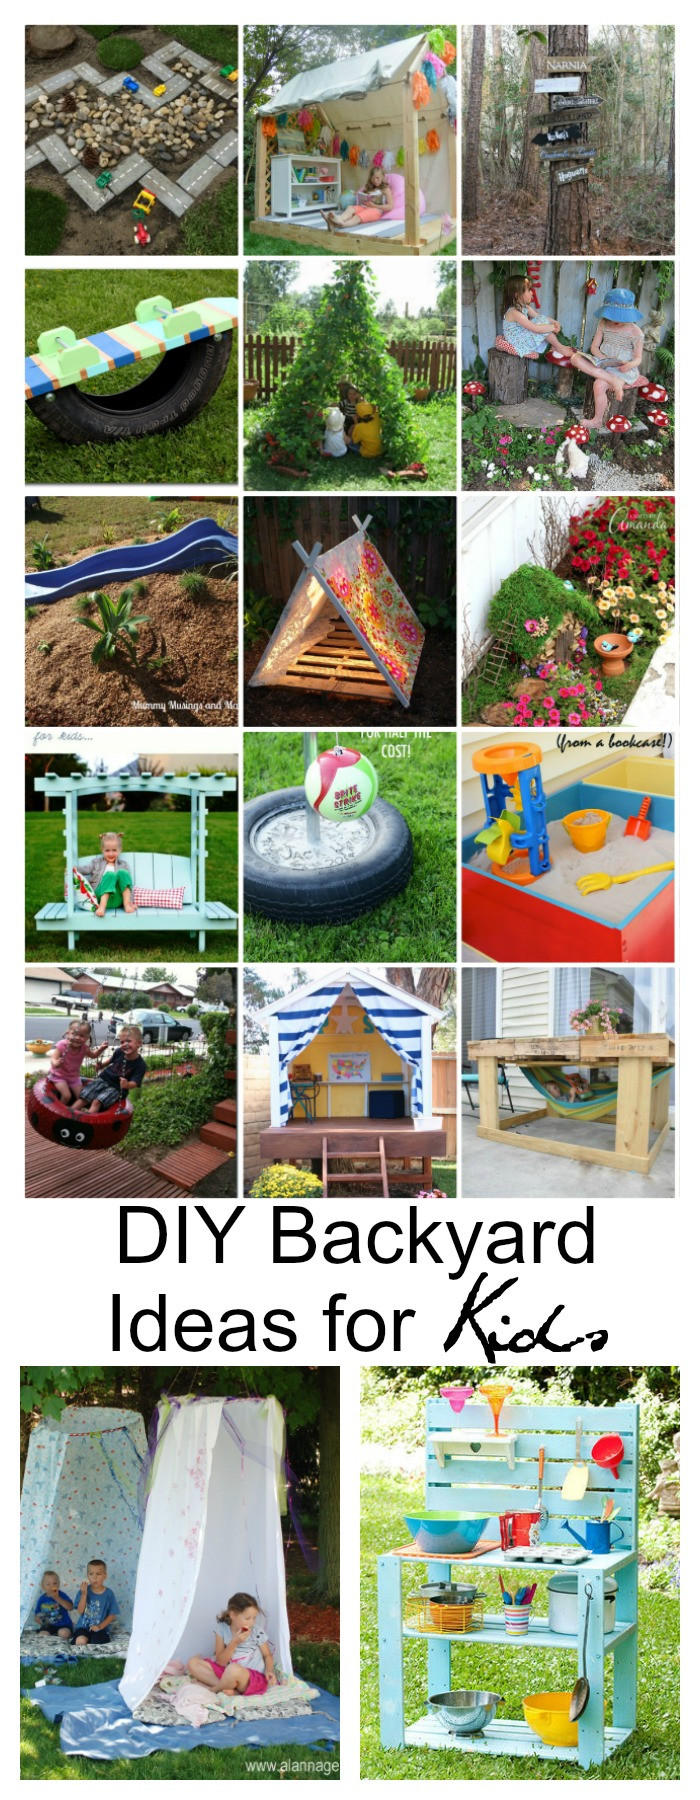 DIY Kids Backyard
 DIY Backyard Ideas for Kids The Idea Room